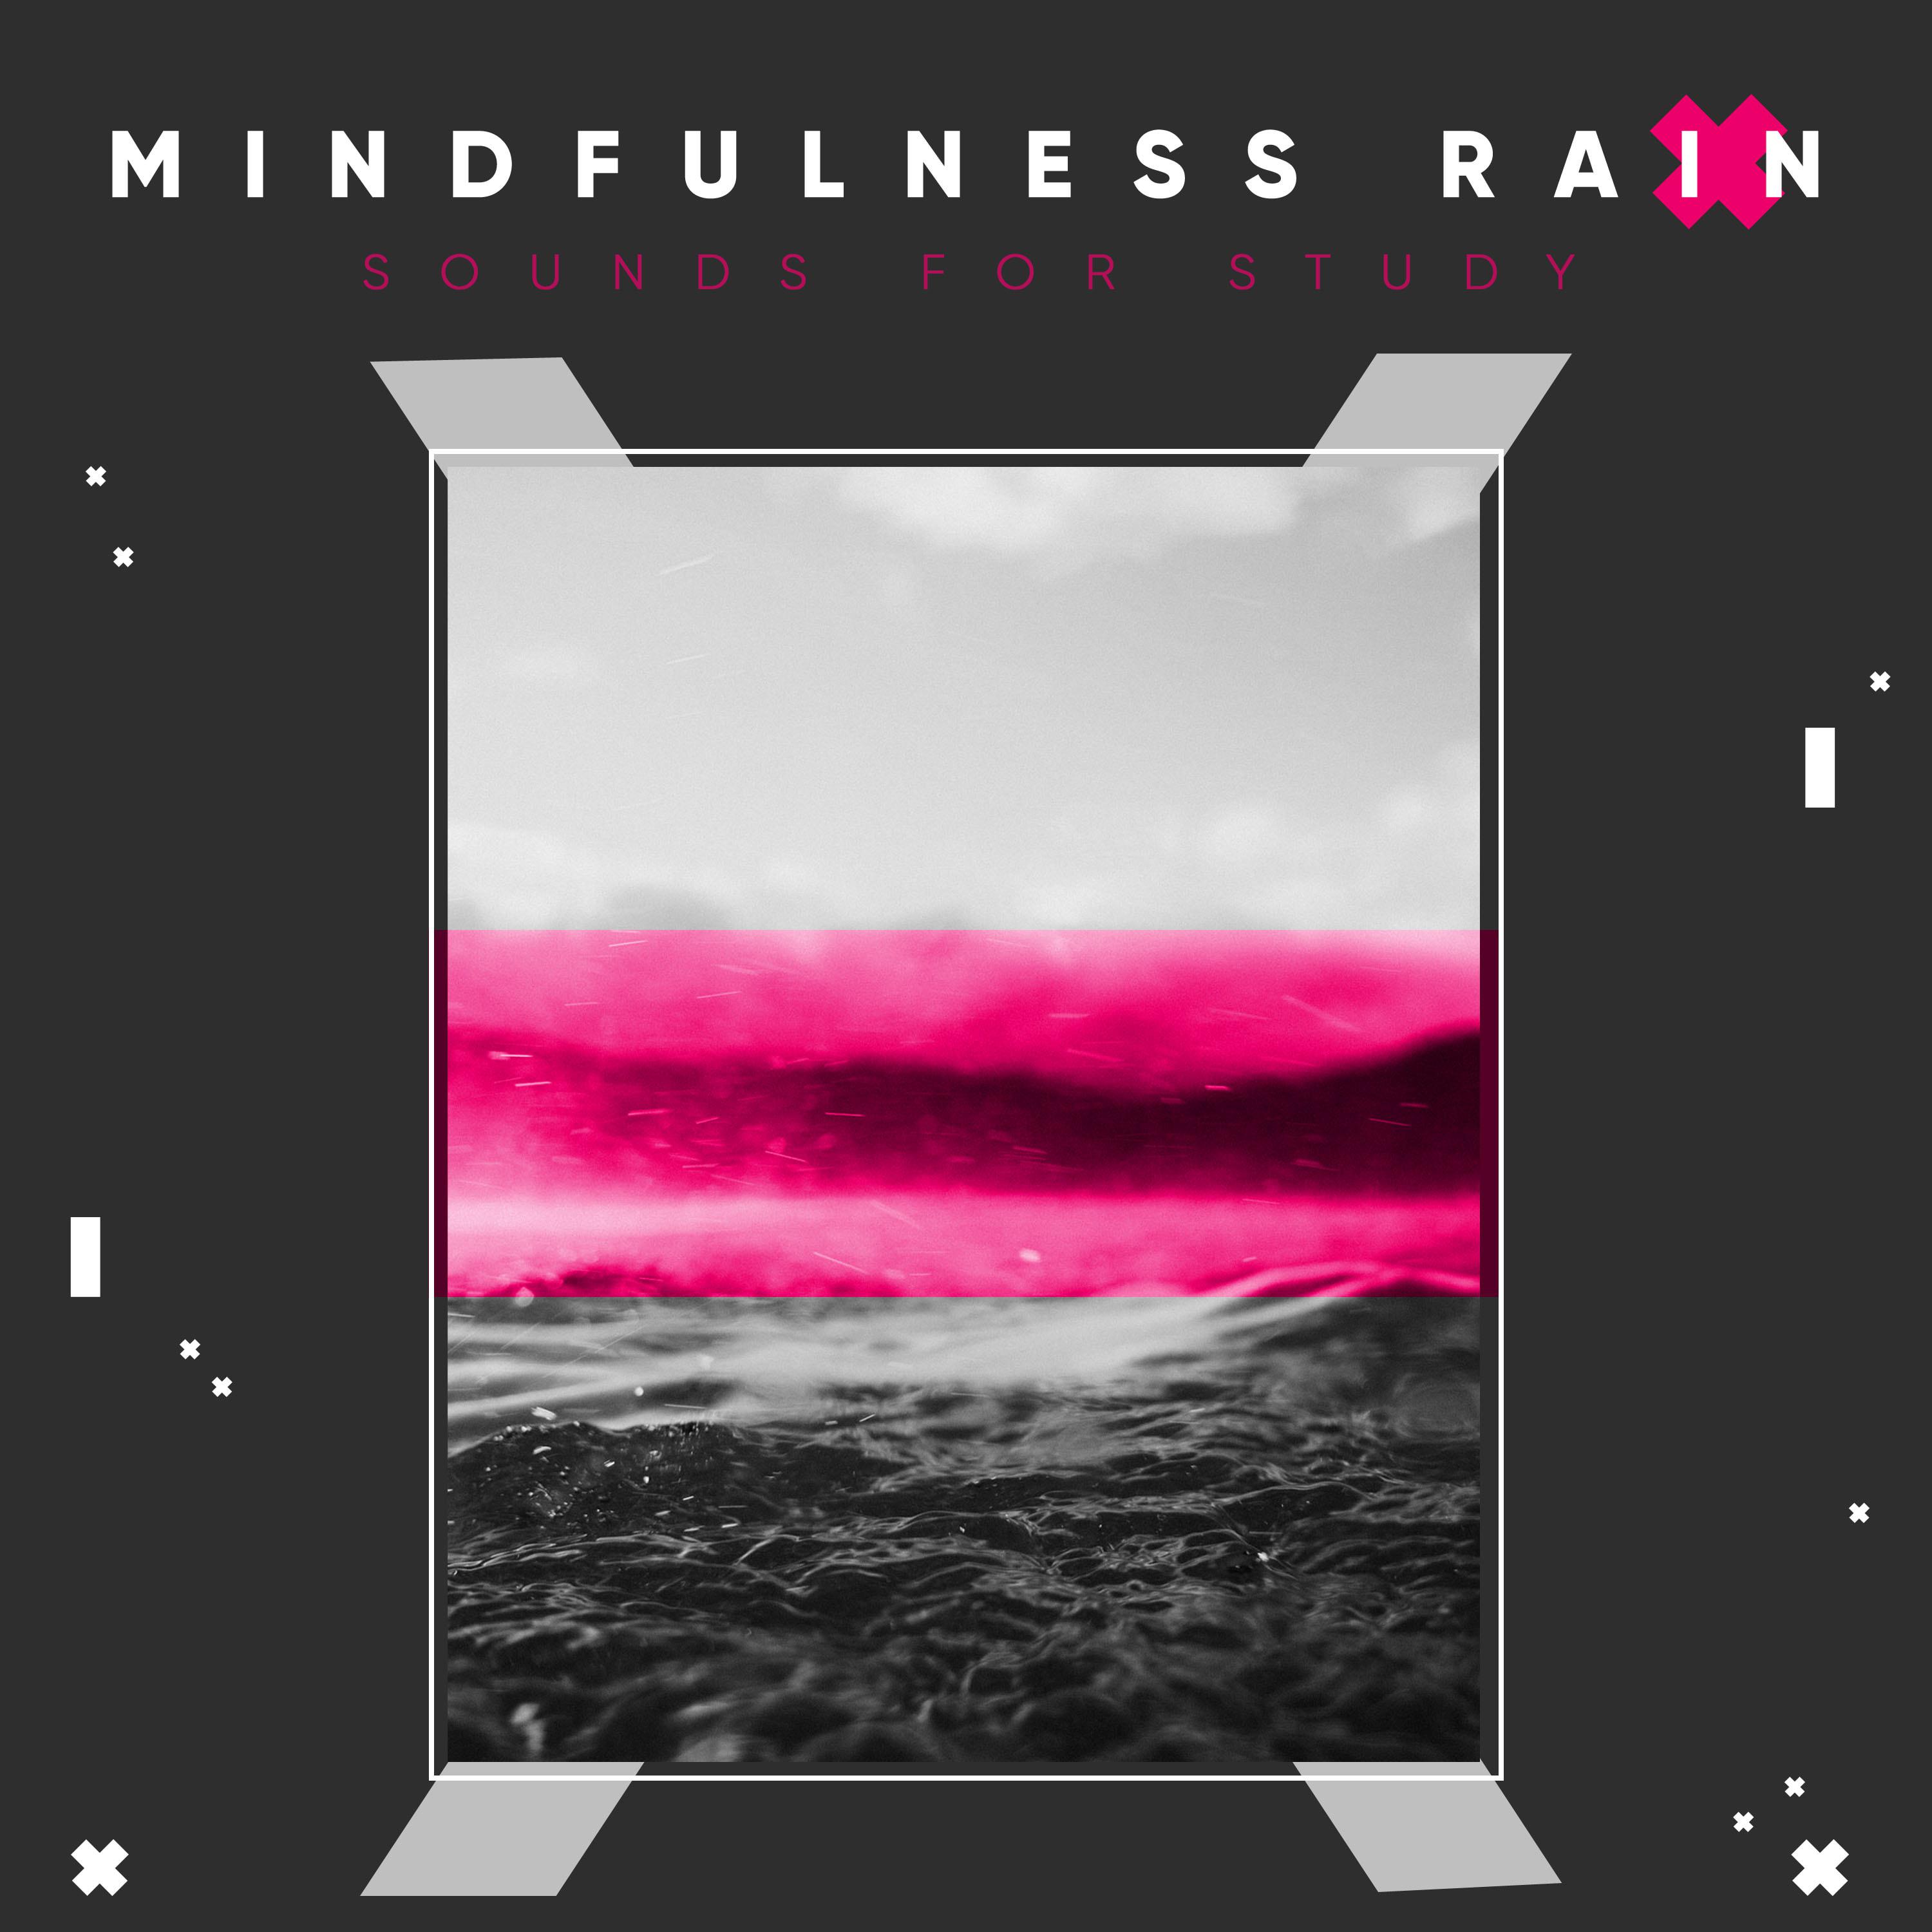 19 Mindfulness Rain Sounds for Study & Reflection